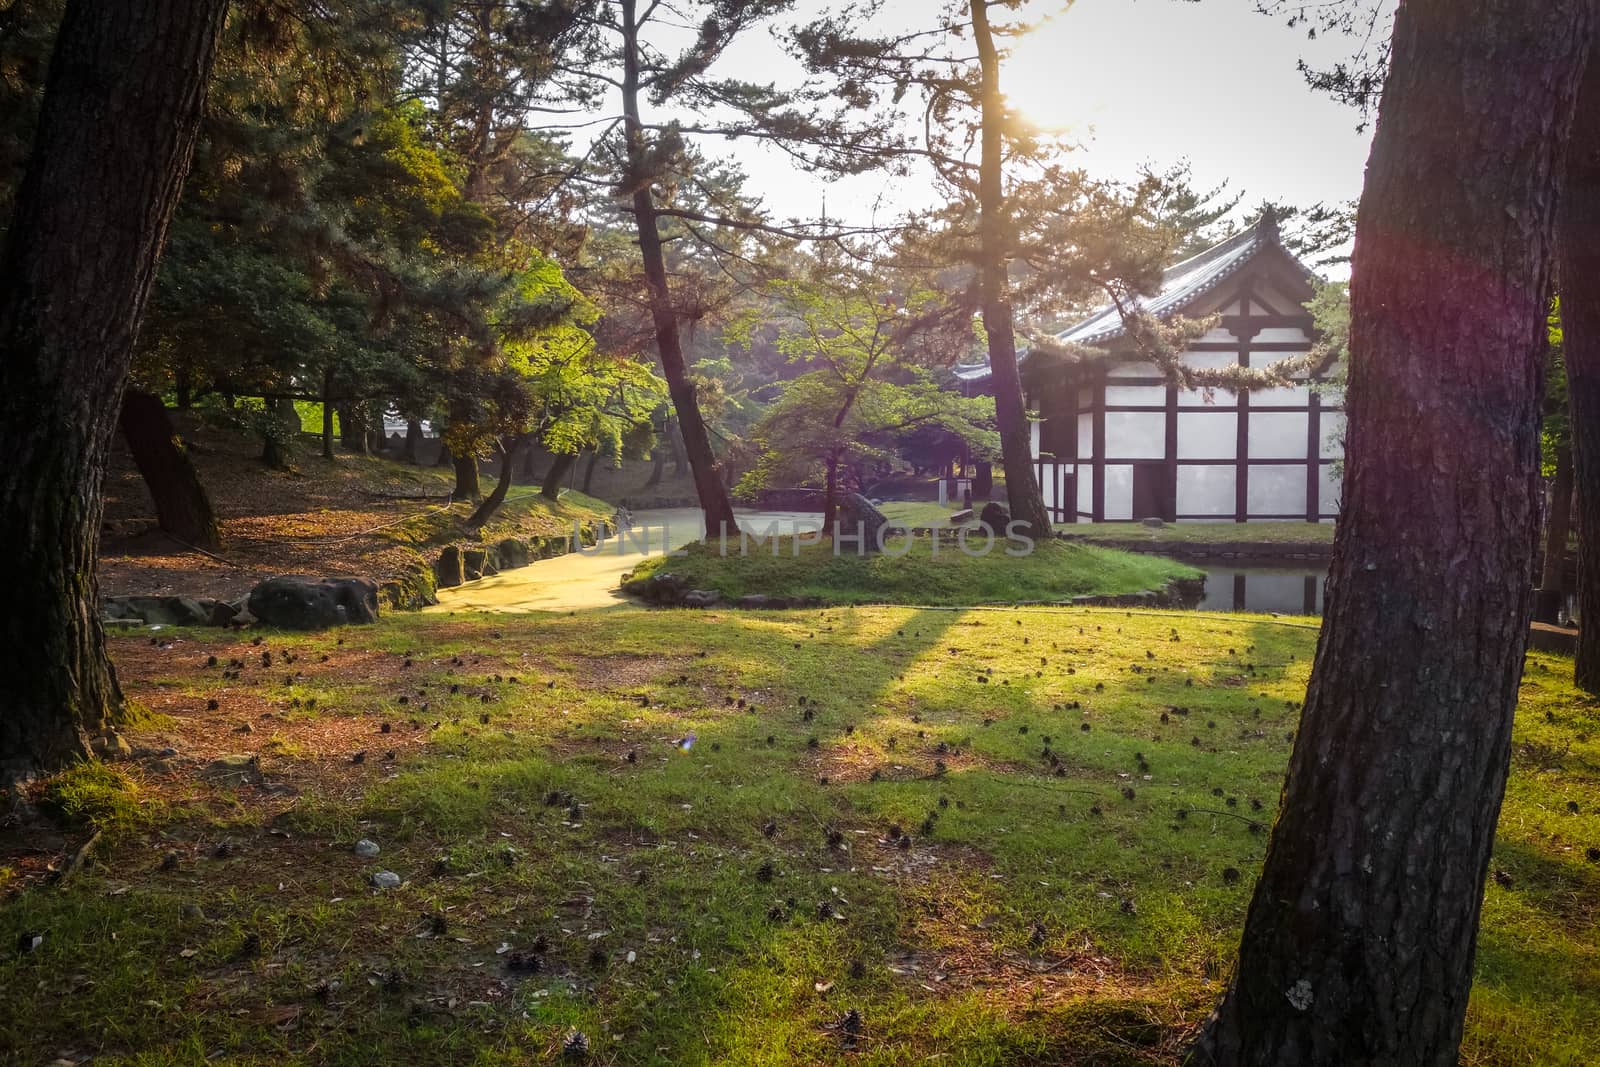 Pavillion in the forest, Nara park, Japan